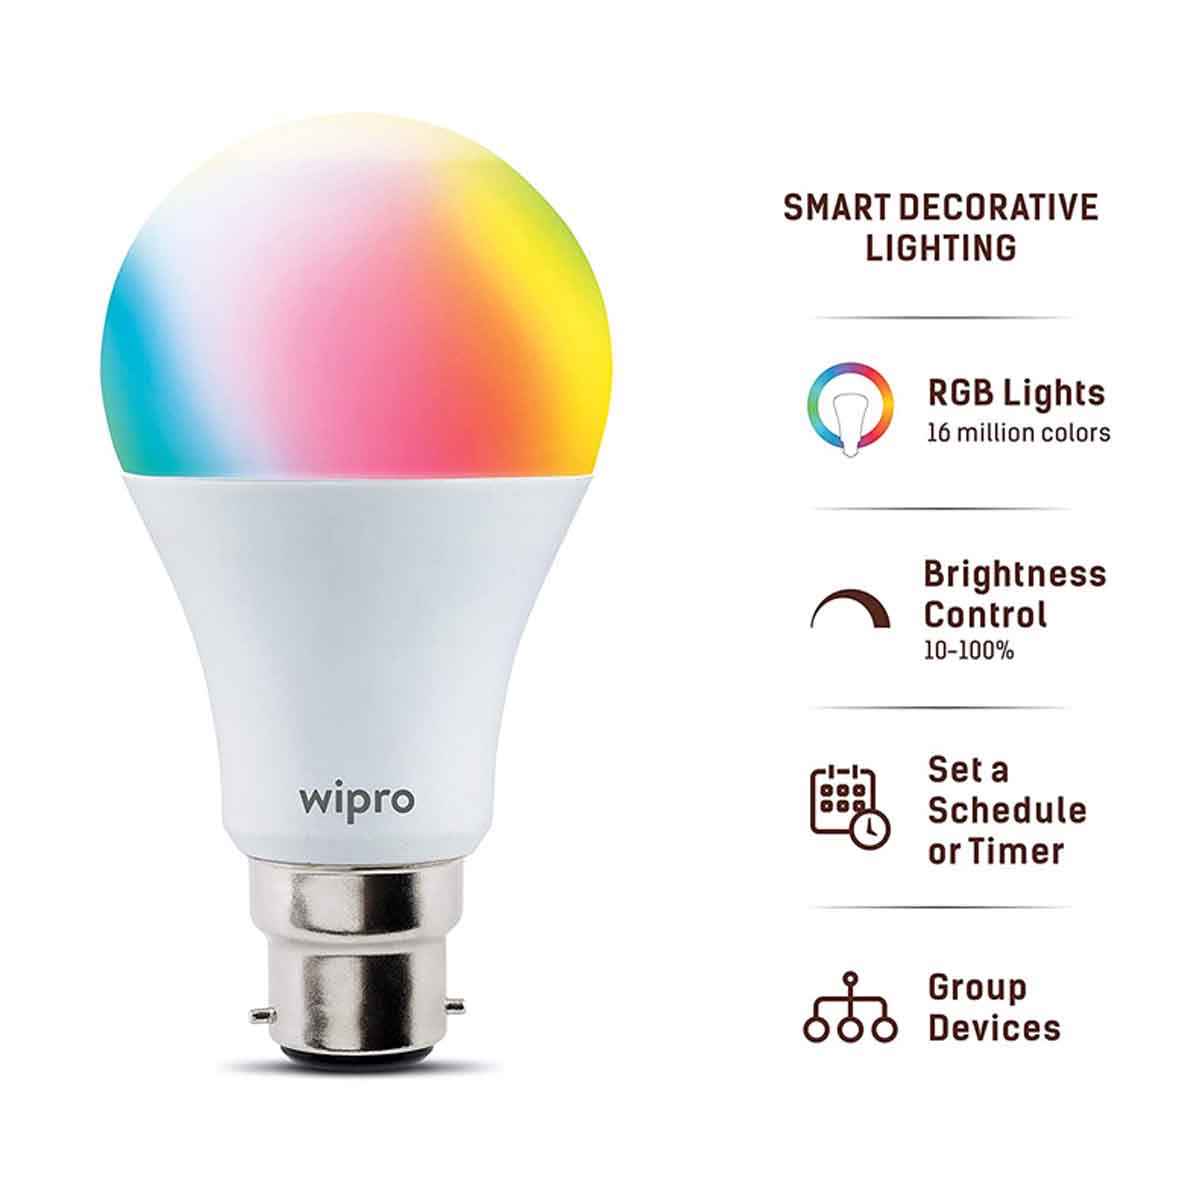 Wipro 12 Watt Smart LED Bulb